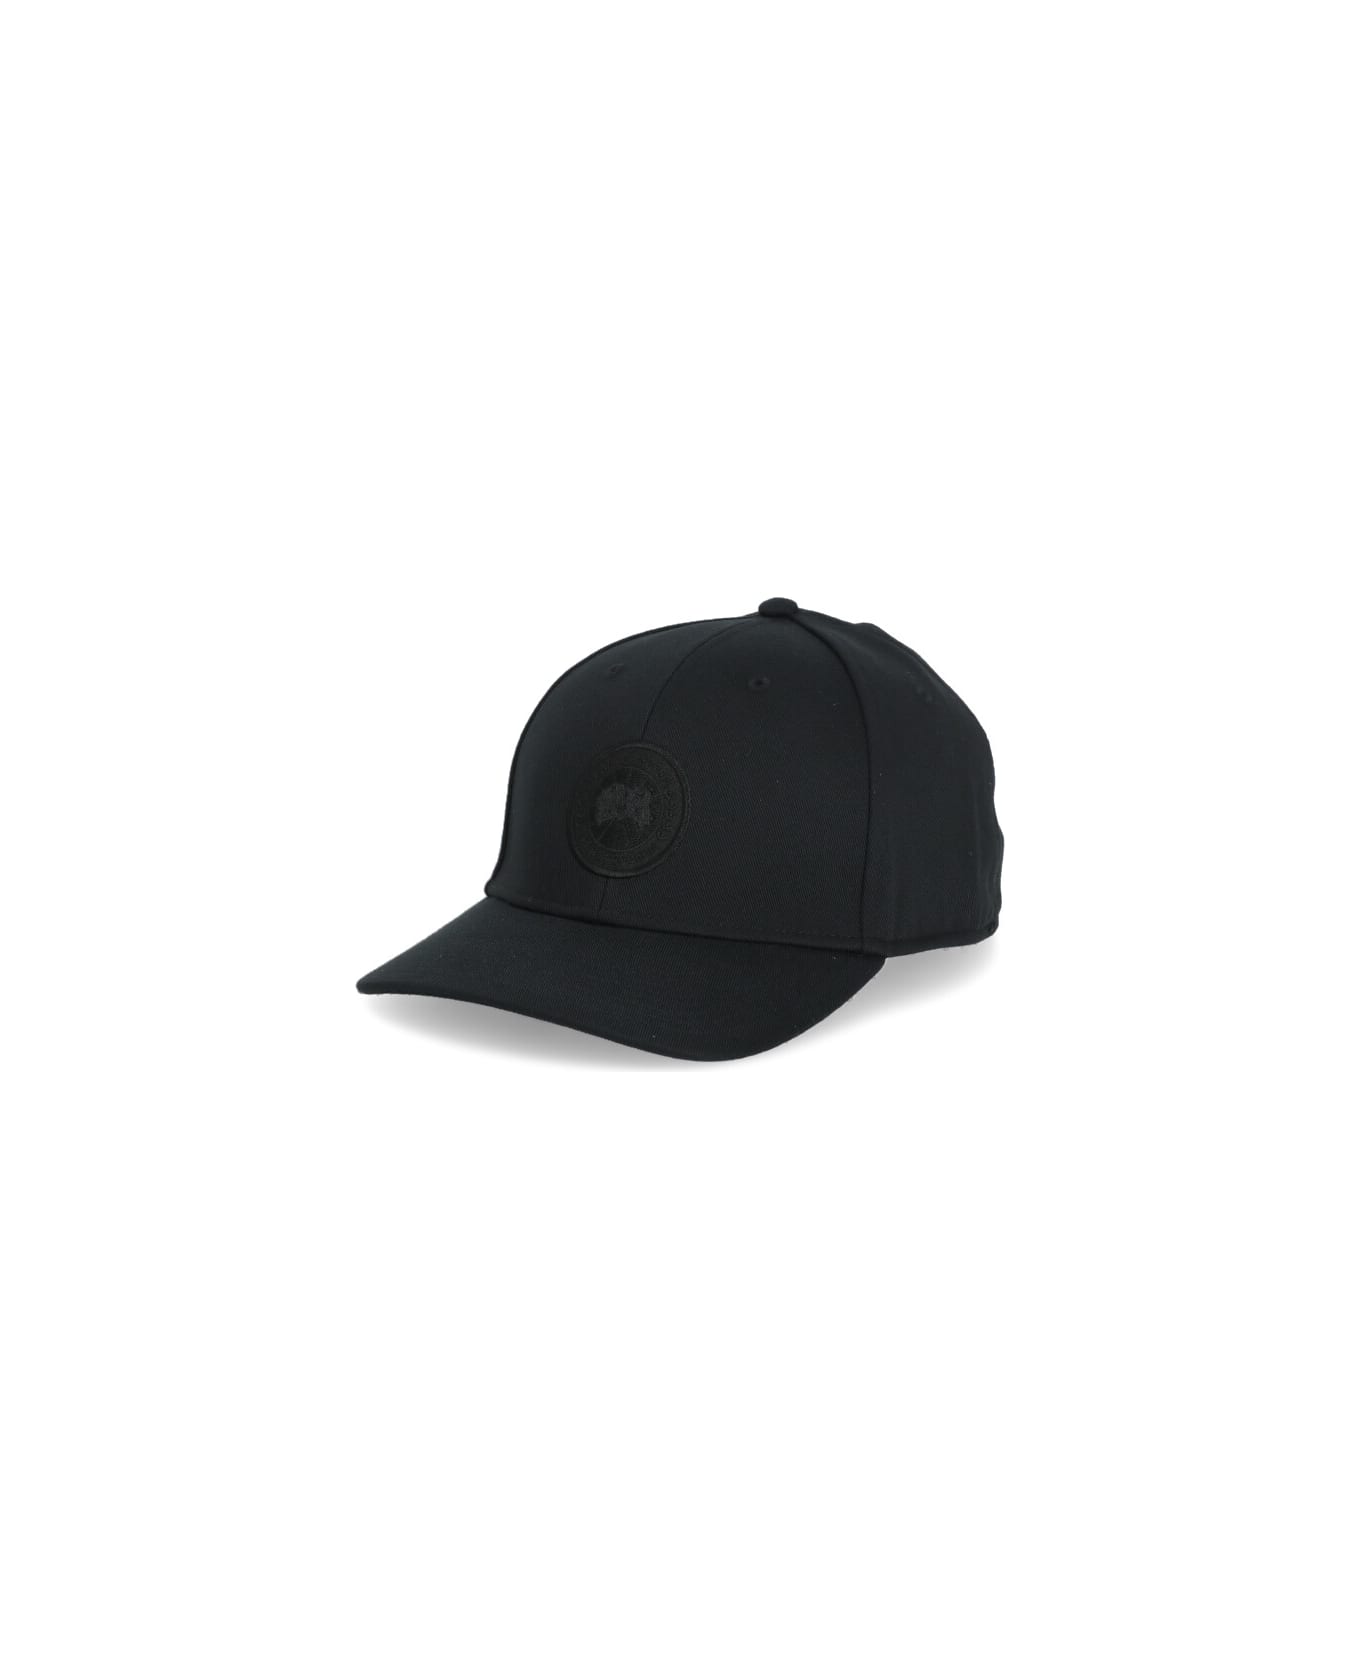 Canada Goose Tonal Hat - Black